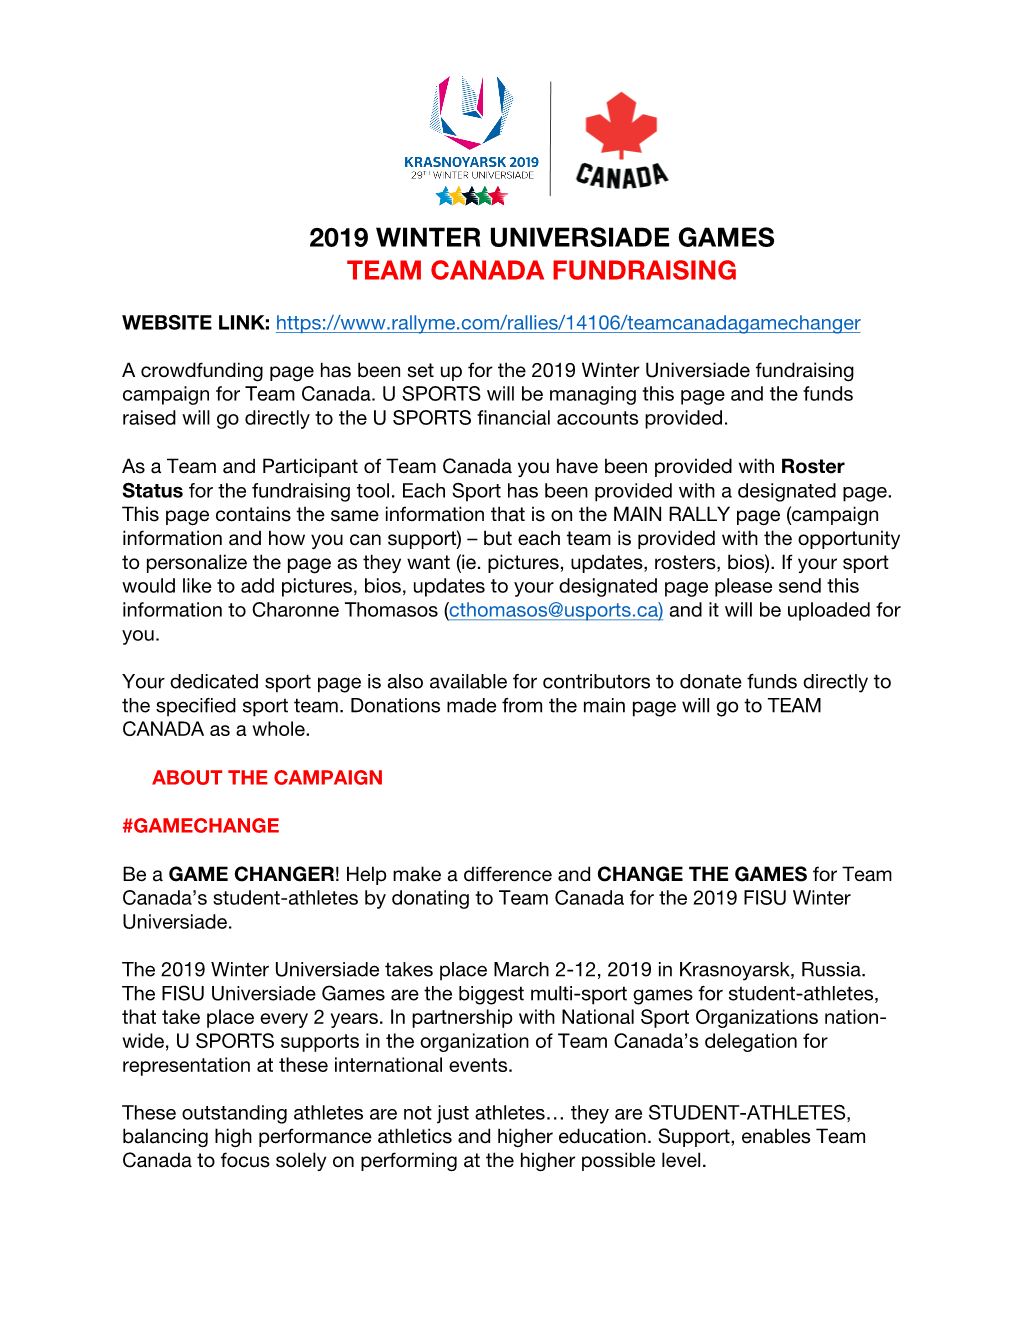 2019 Winter Universiade Games Team Canada Fundraising